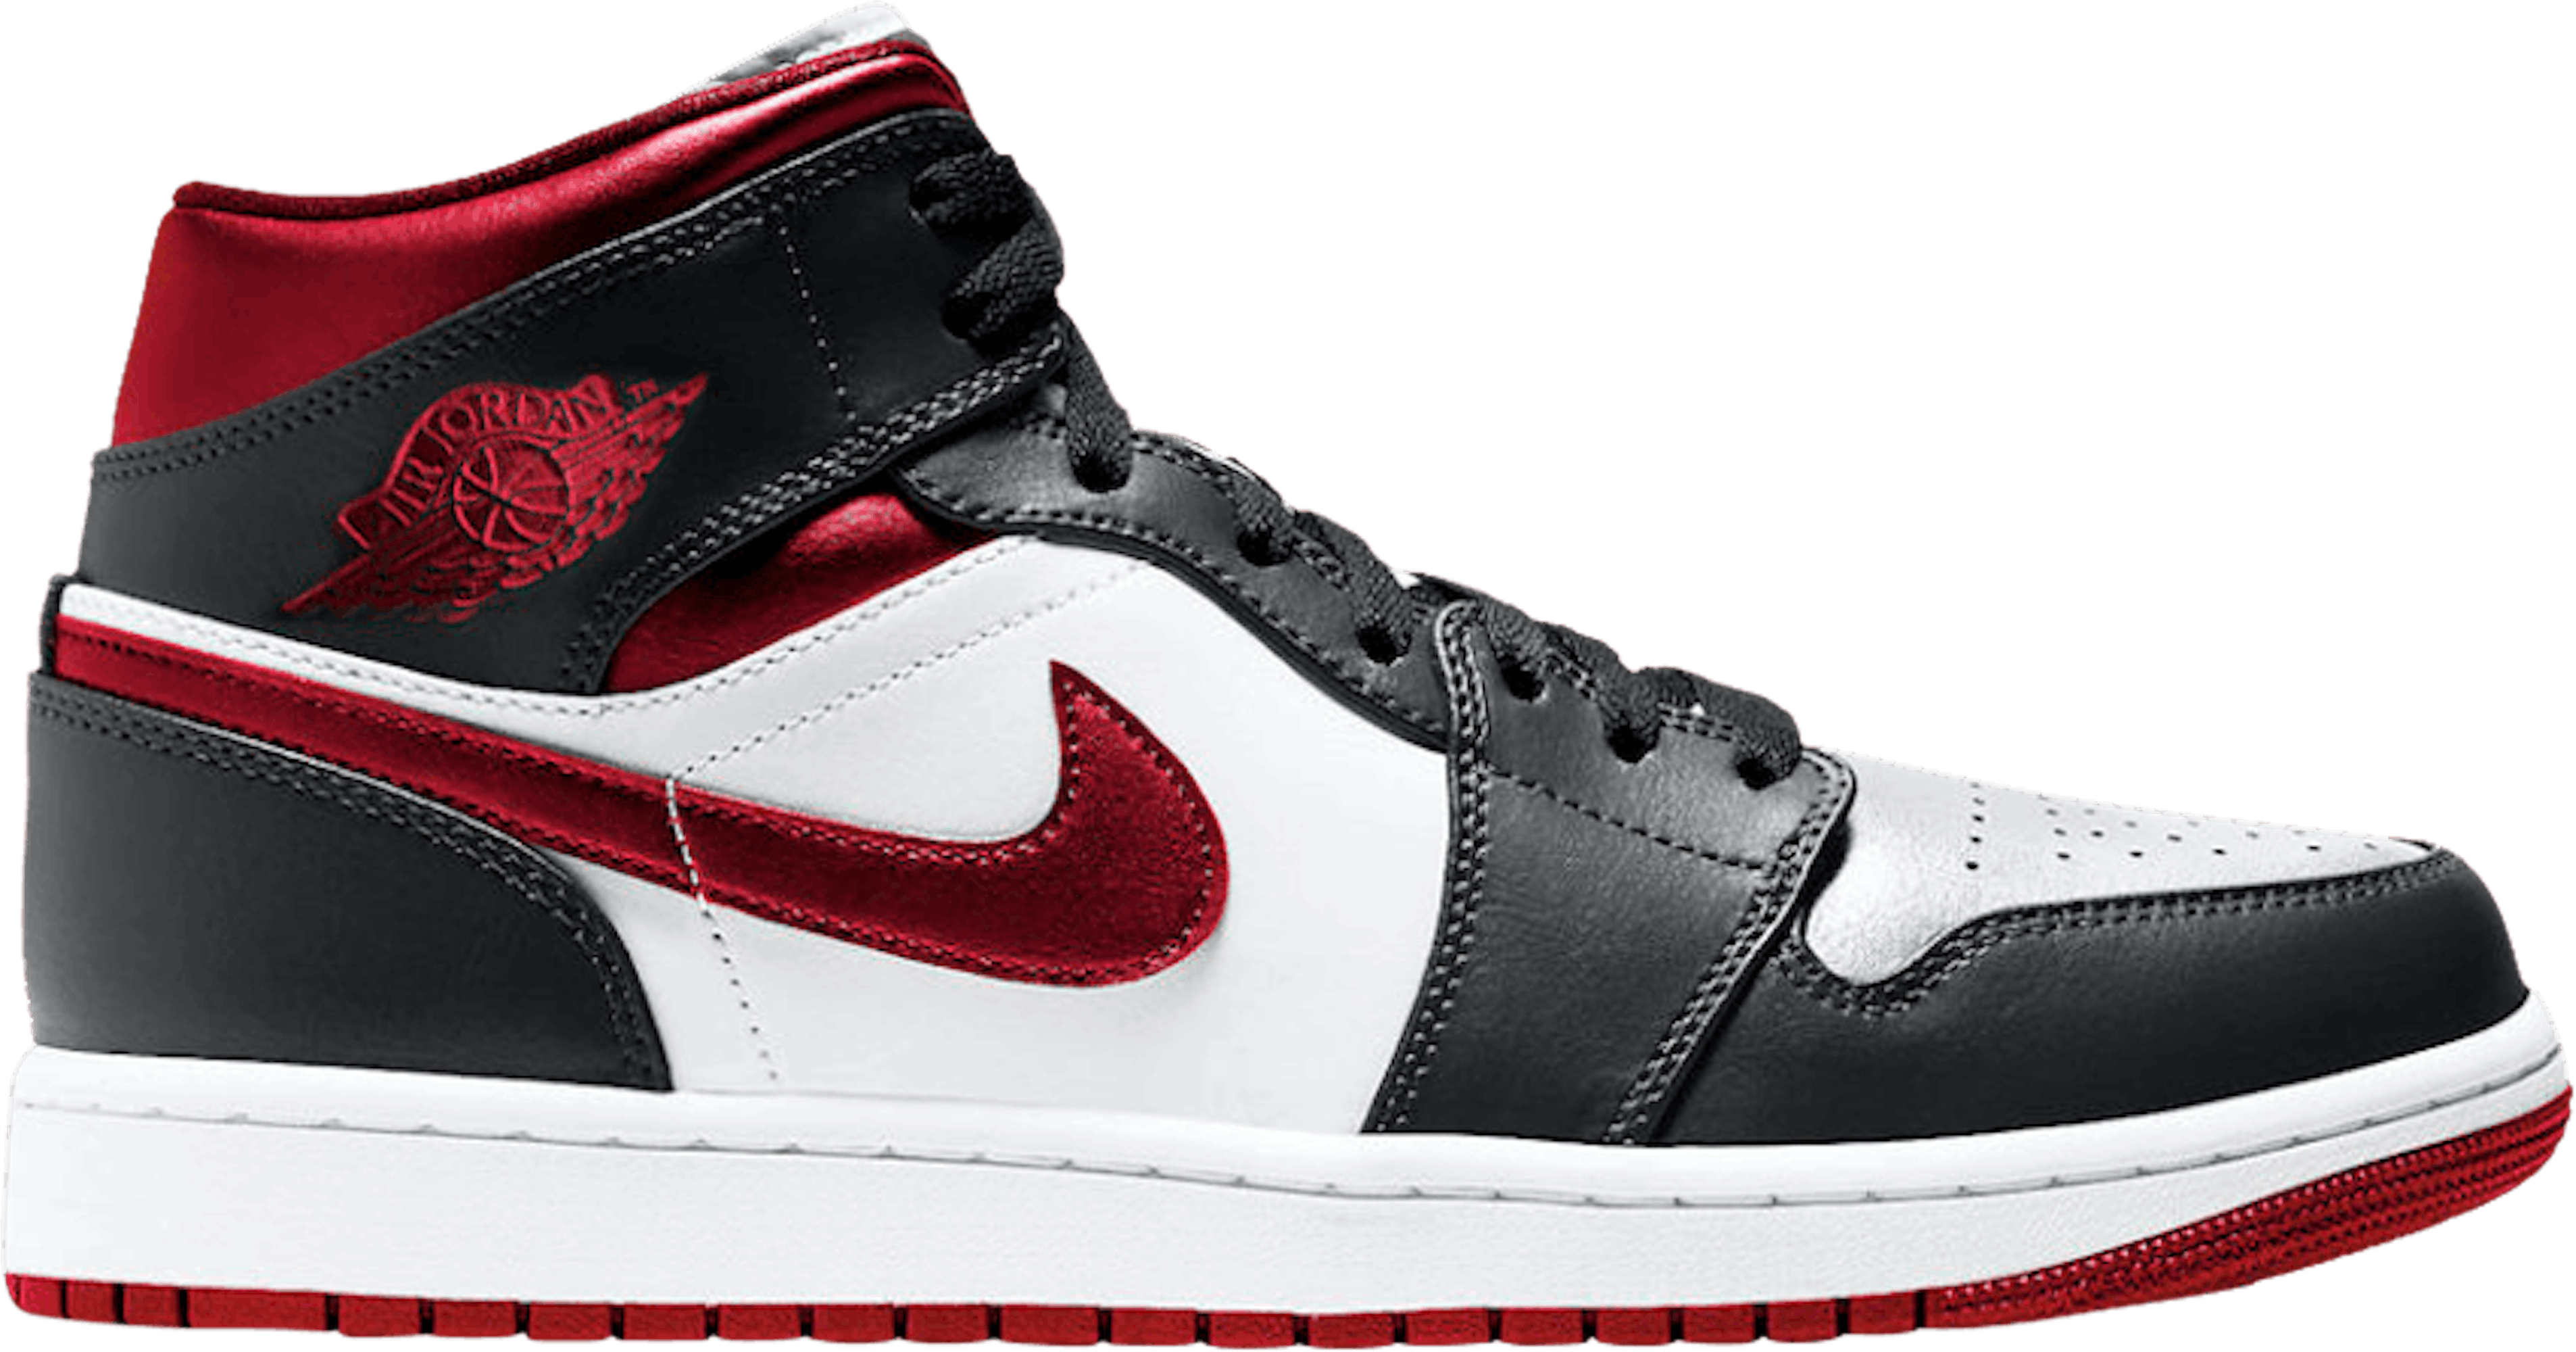 Air Jordan 1 Mid "Metallic Red" | 554724-122 | Sneaker Squad